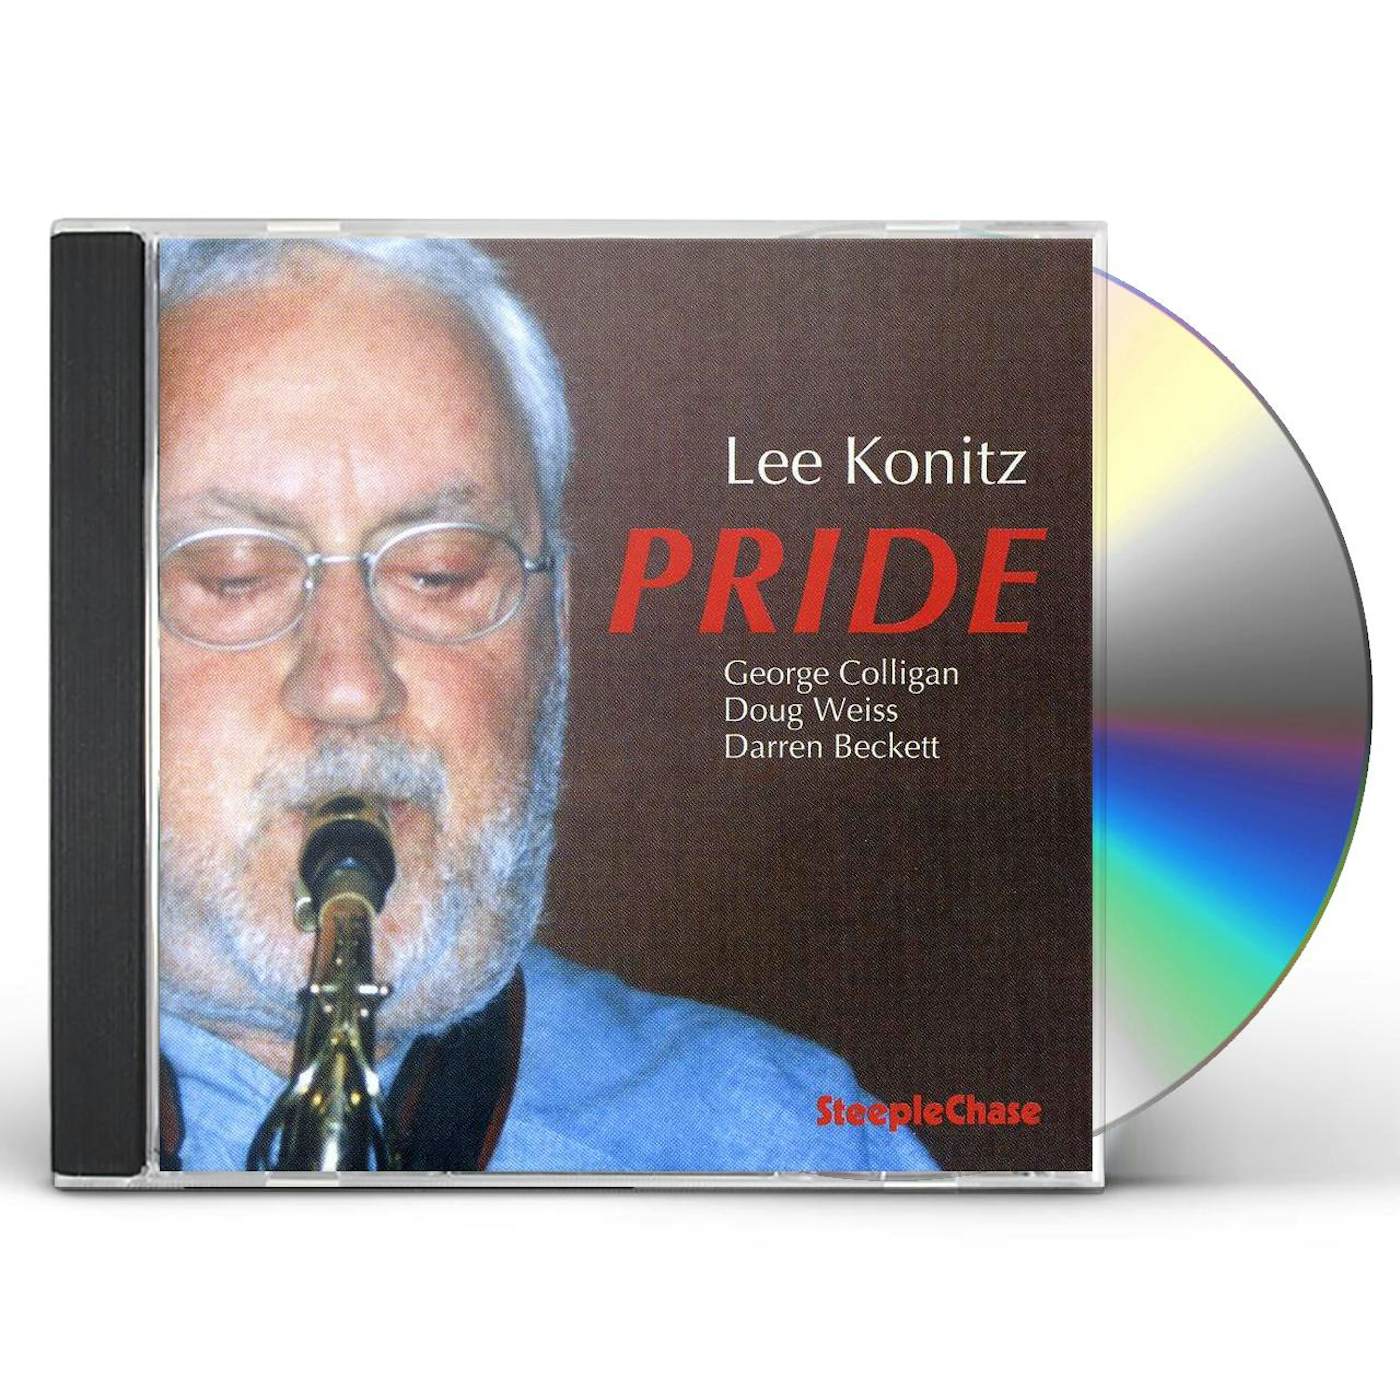 Lee Konitz PRIDE CD